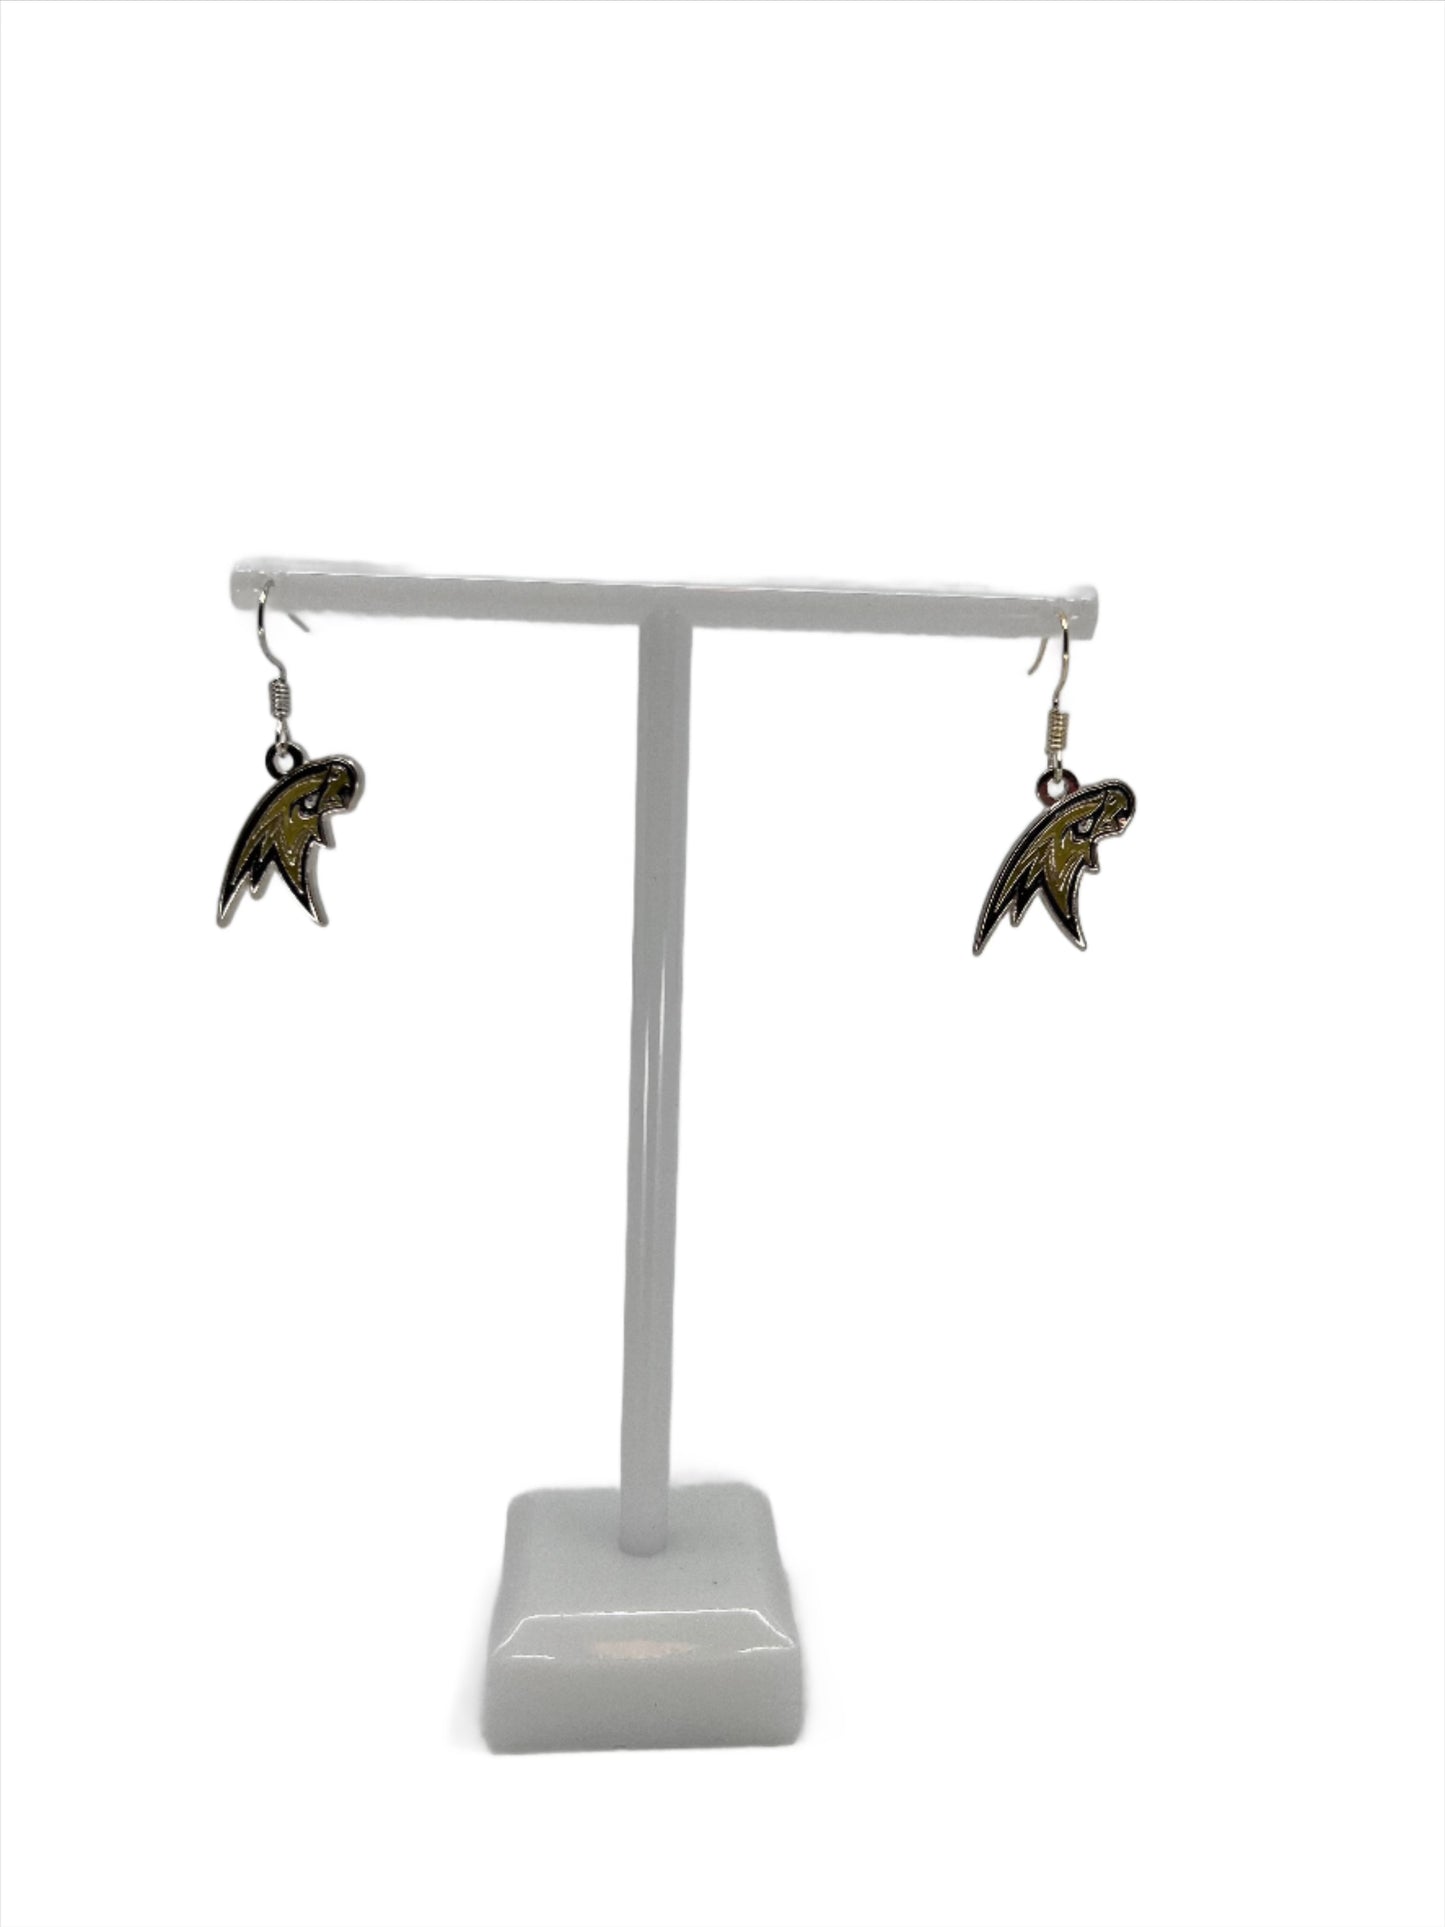 Corning Hawks Charm Earrings - Hoops or Fish Hooks